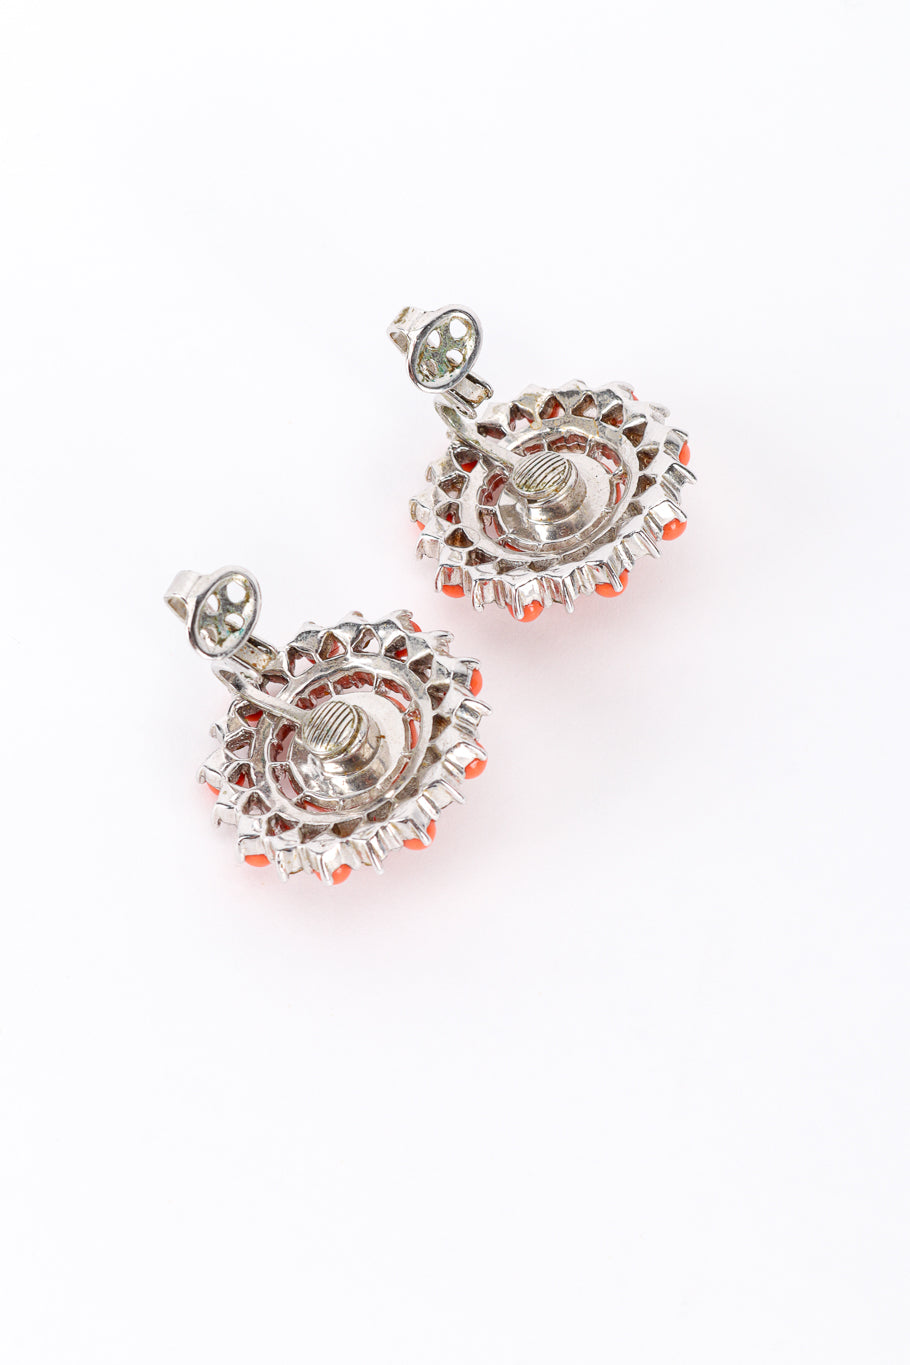 Vintage Trifari Coral Lucite Necklace & Earring Set earring clips unfastened @recess la